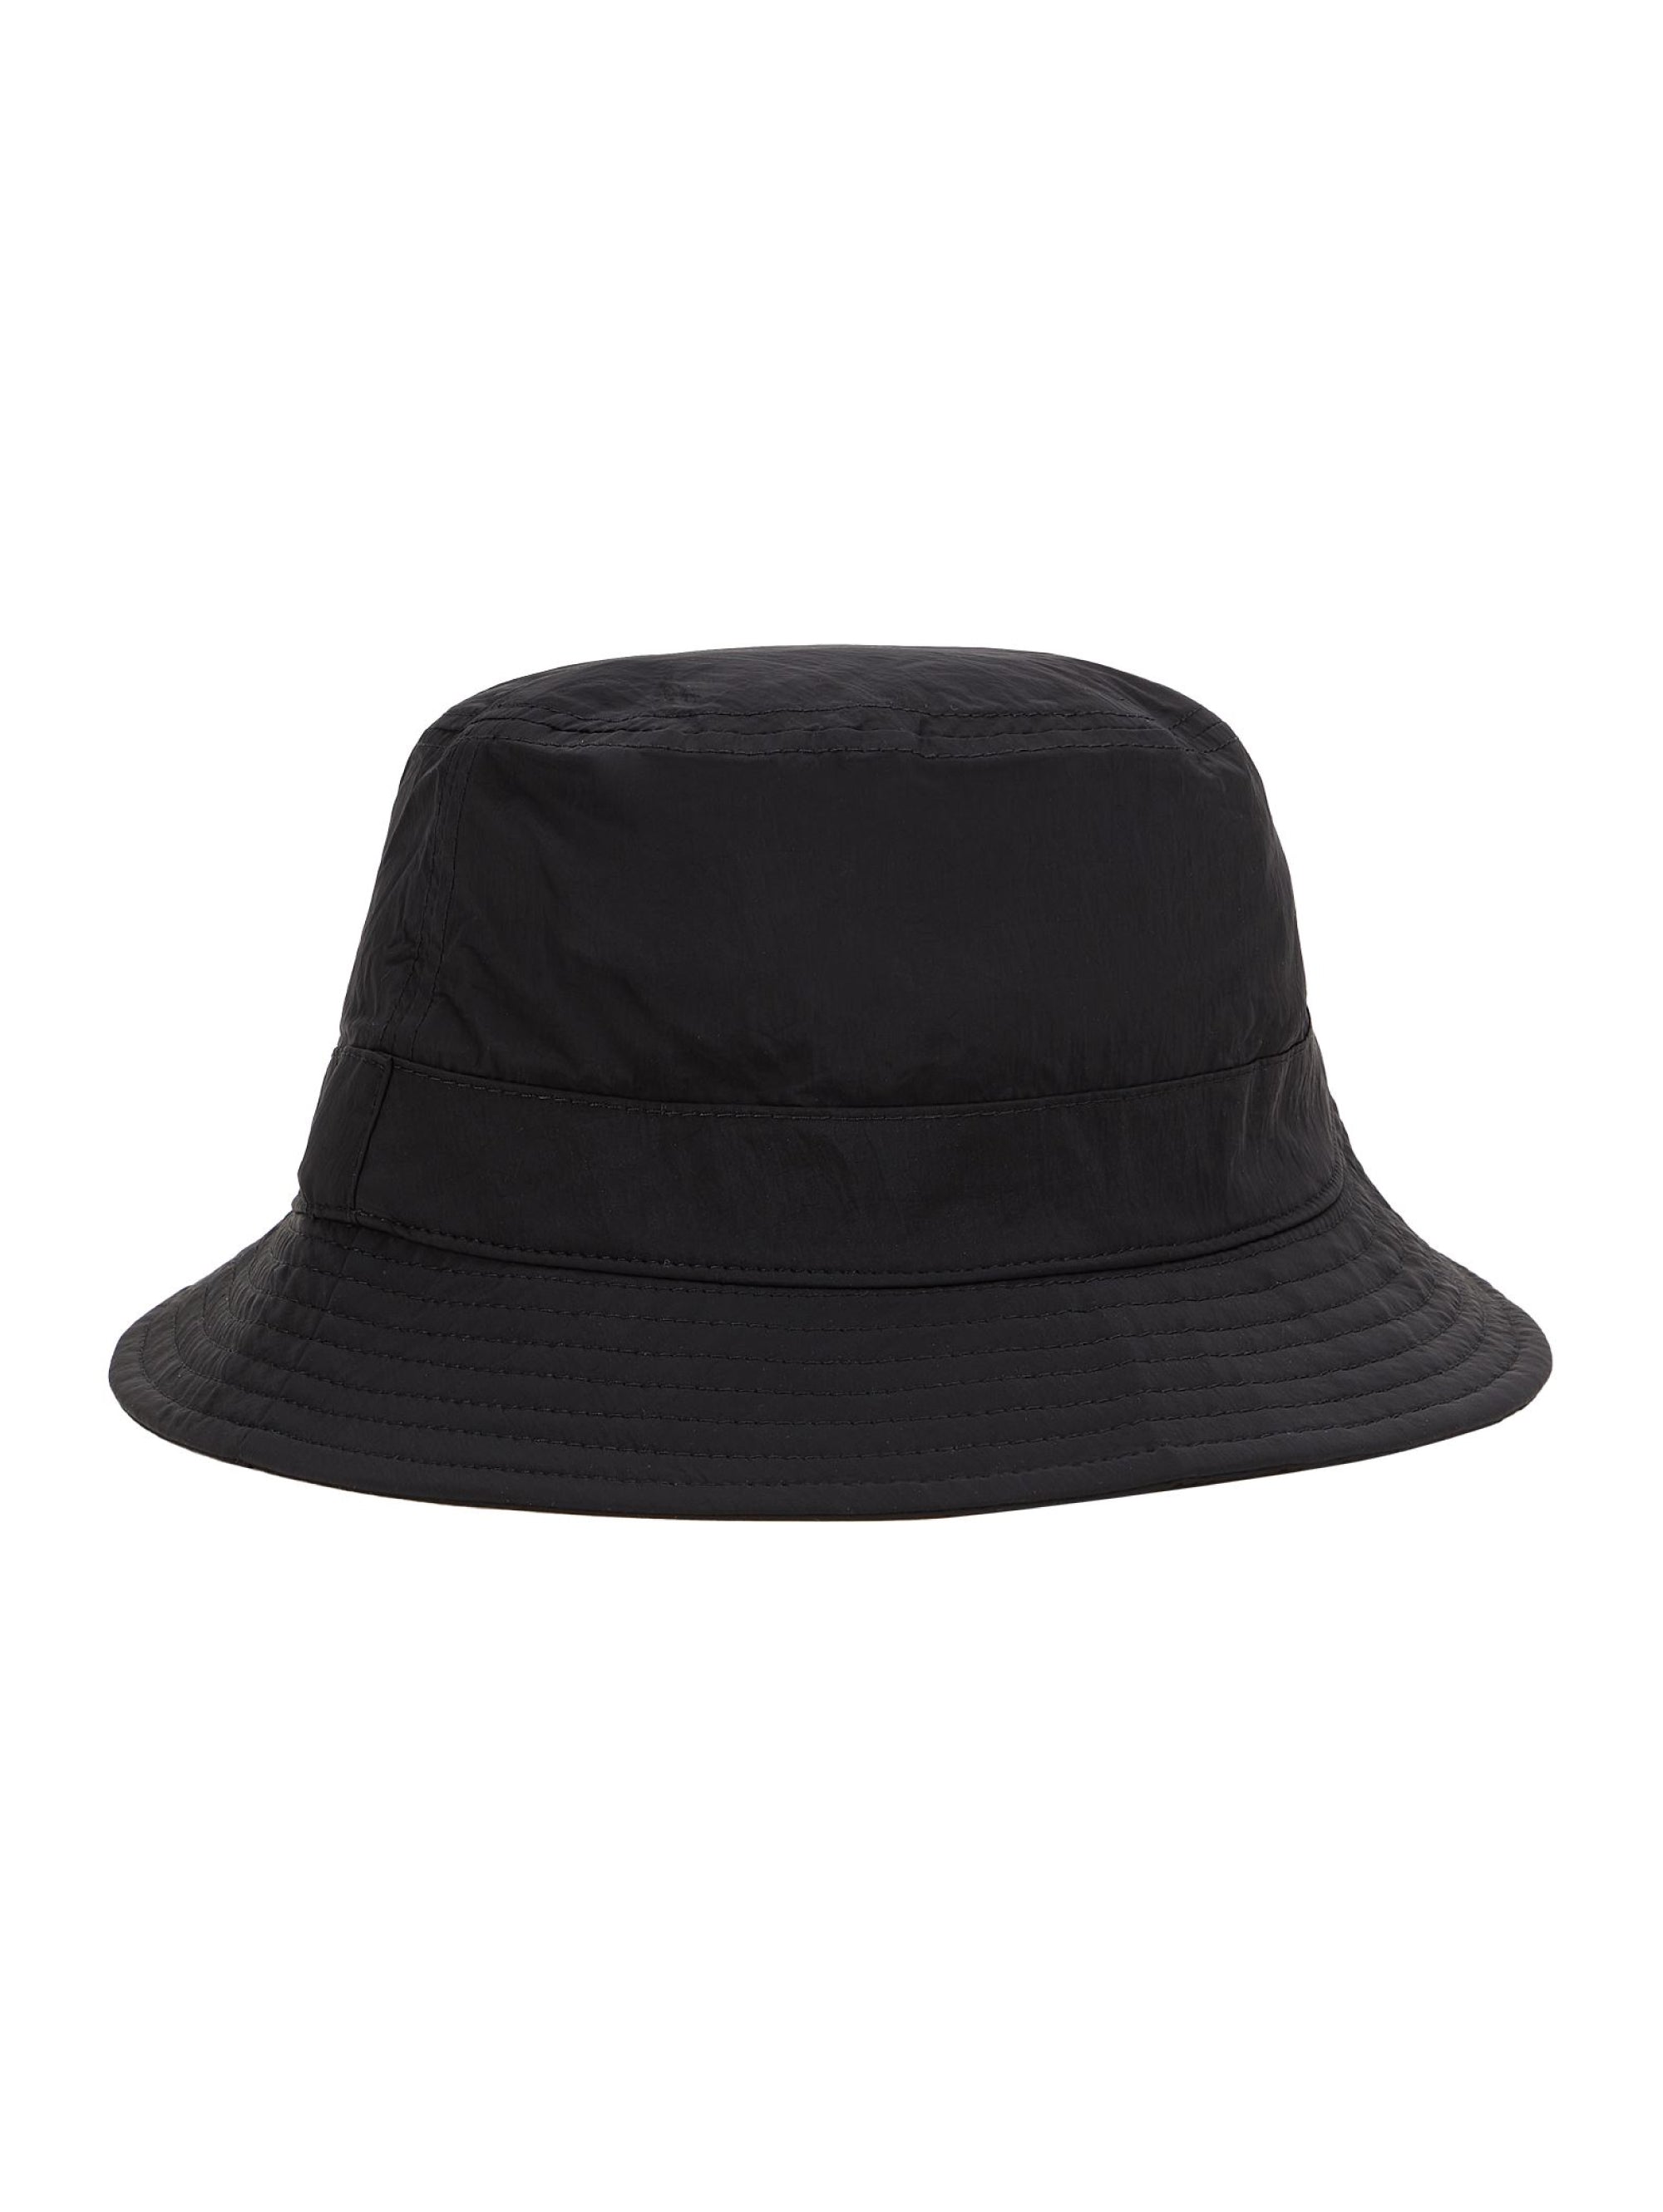 Black Metal Nylon Fisherman Hat